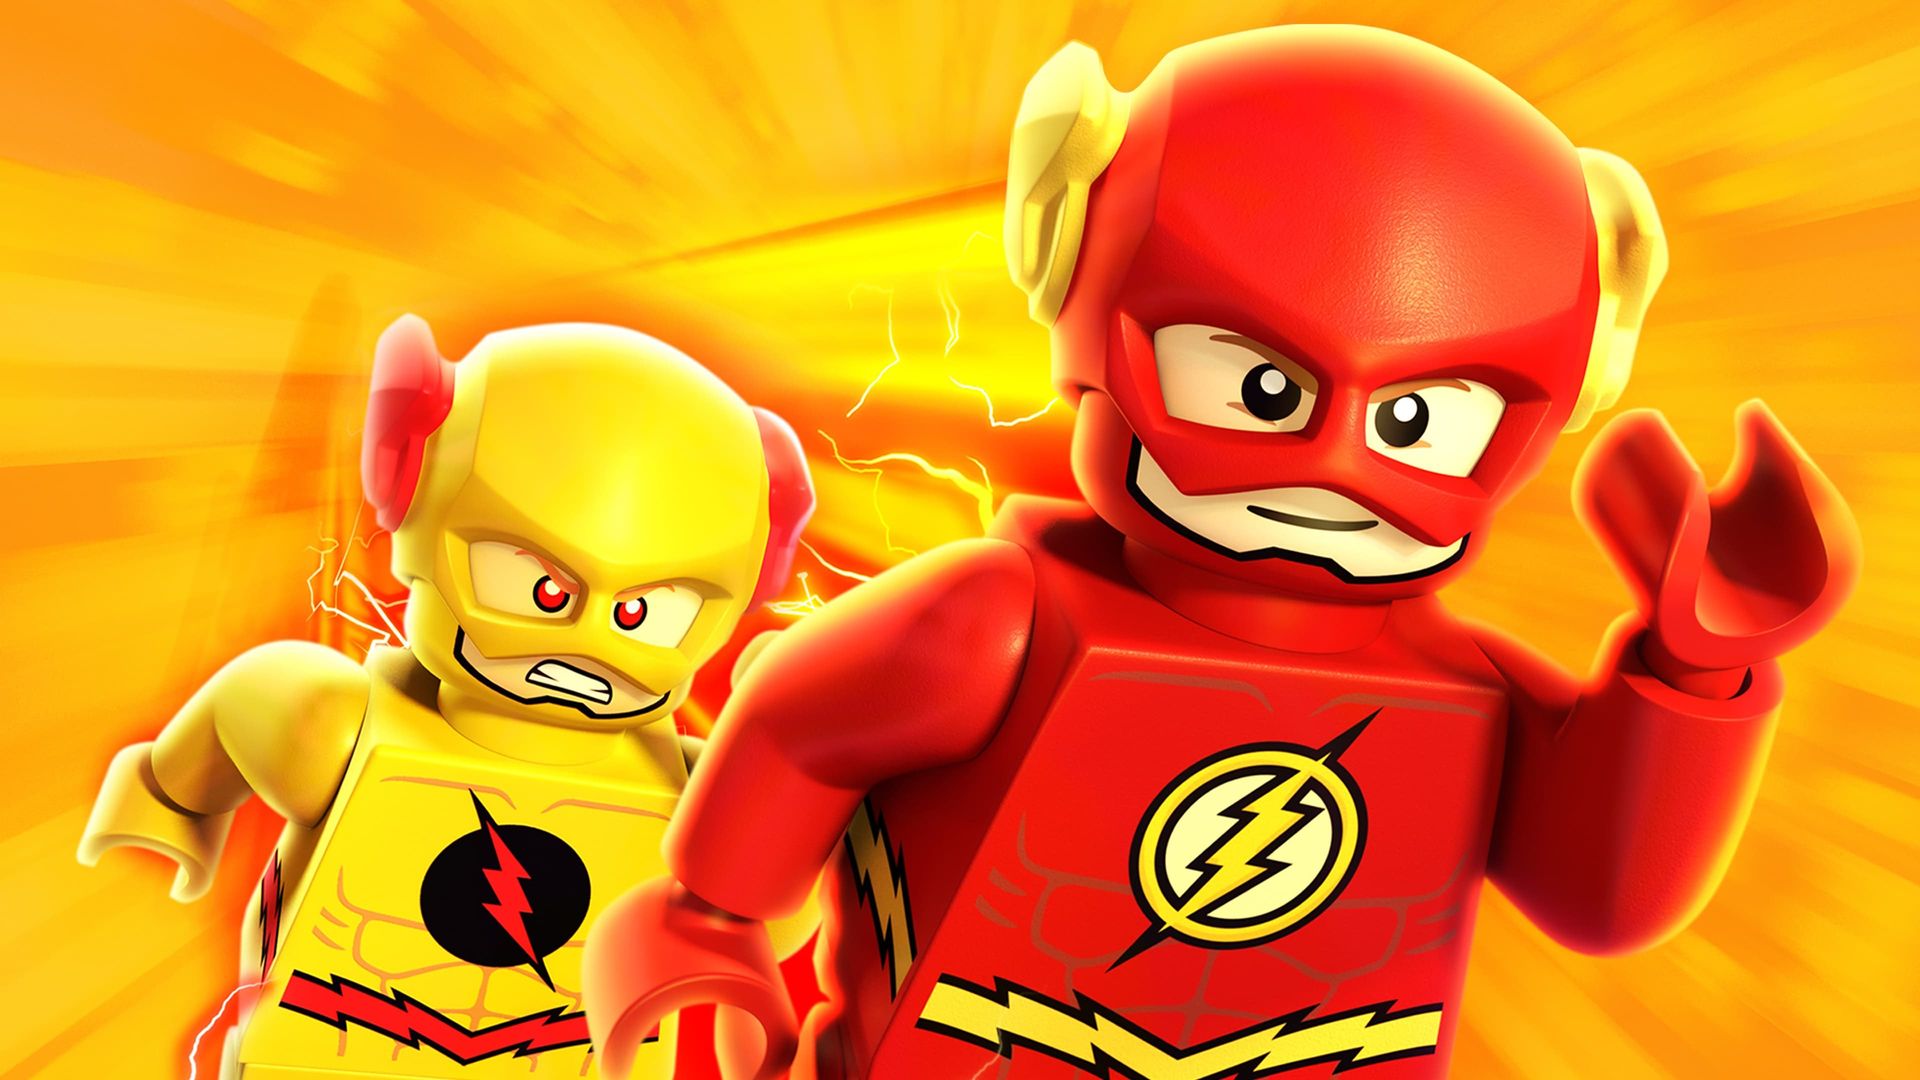 Lego DC Comics Super Heroes: The Flash background